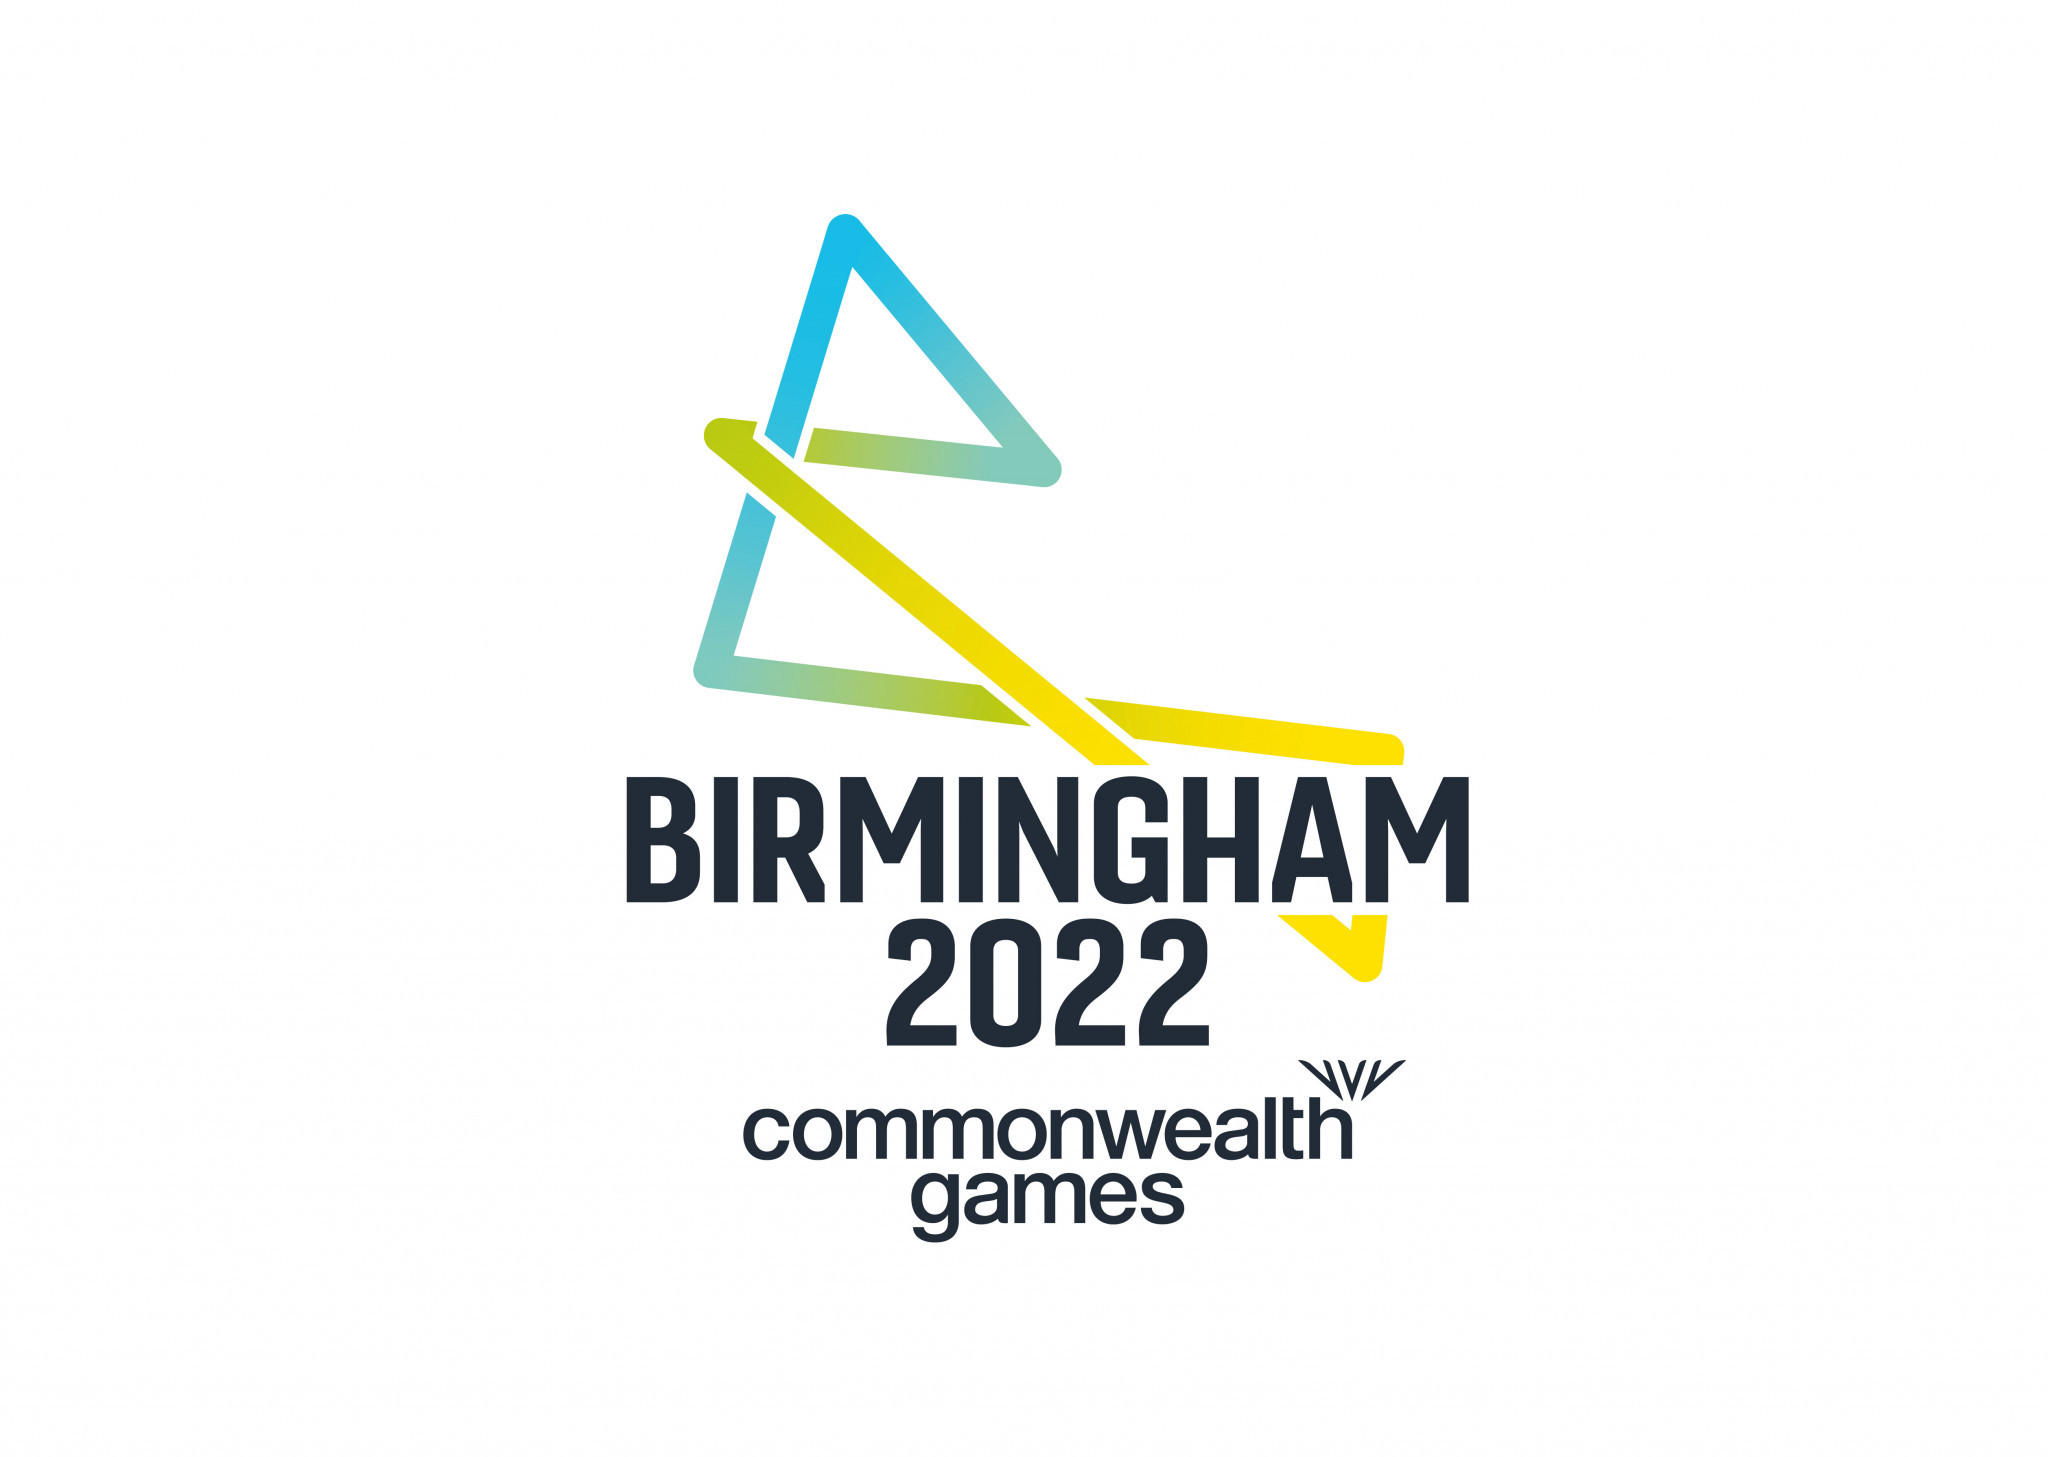 Birmingham 2022 has opened its apprenticeship scheme ©Birmingham 2022